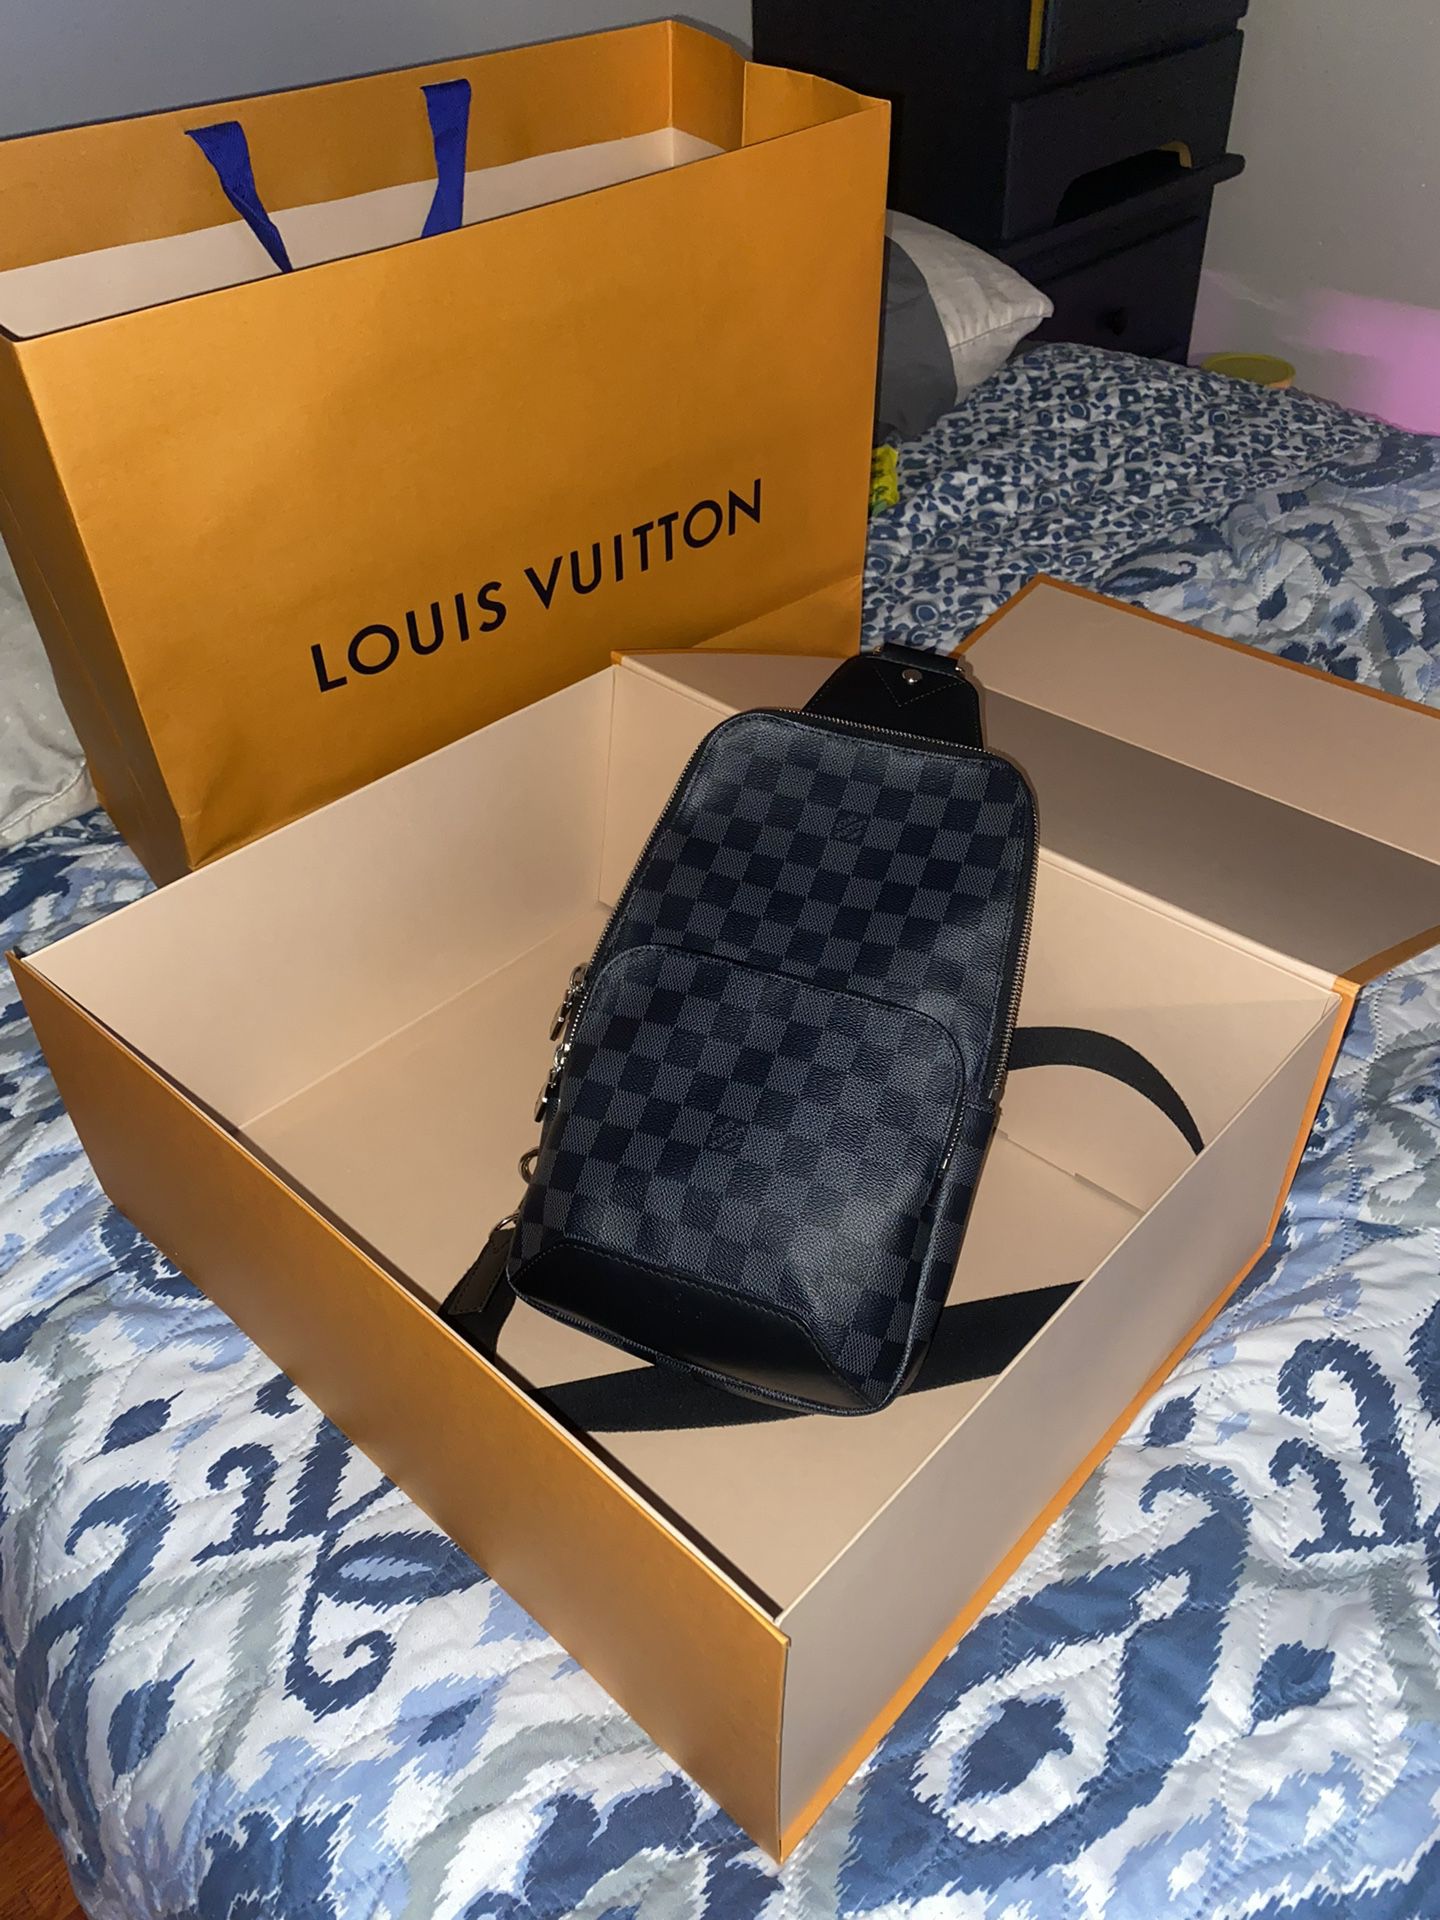 Louis Vuitton Damier Graphite Sling Bag for Sale in Scottsdale, AZ - OfferUp